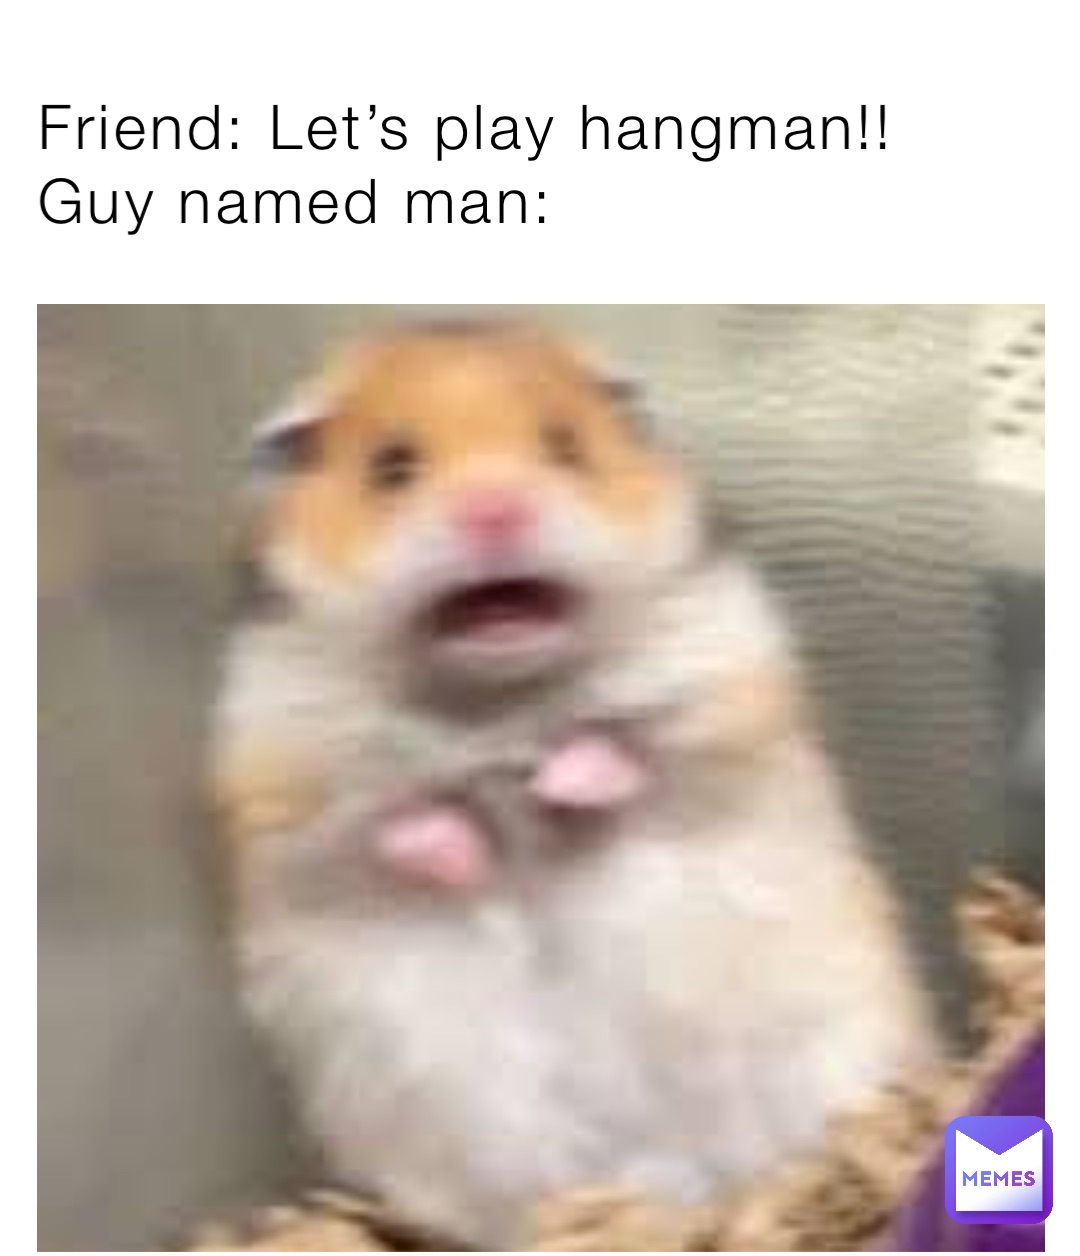 Friend: Let’s play hangman!!
Guy named man: